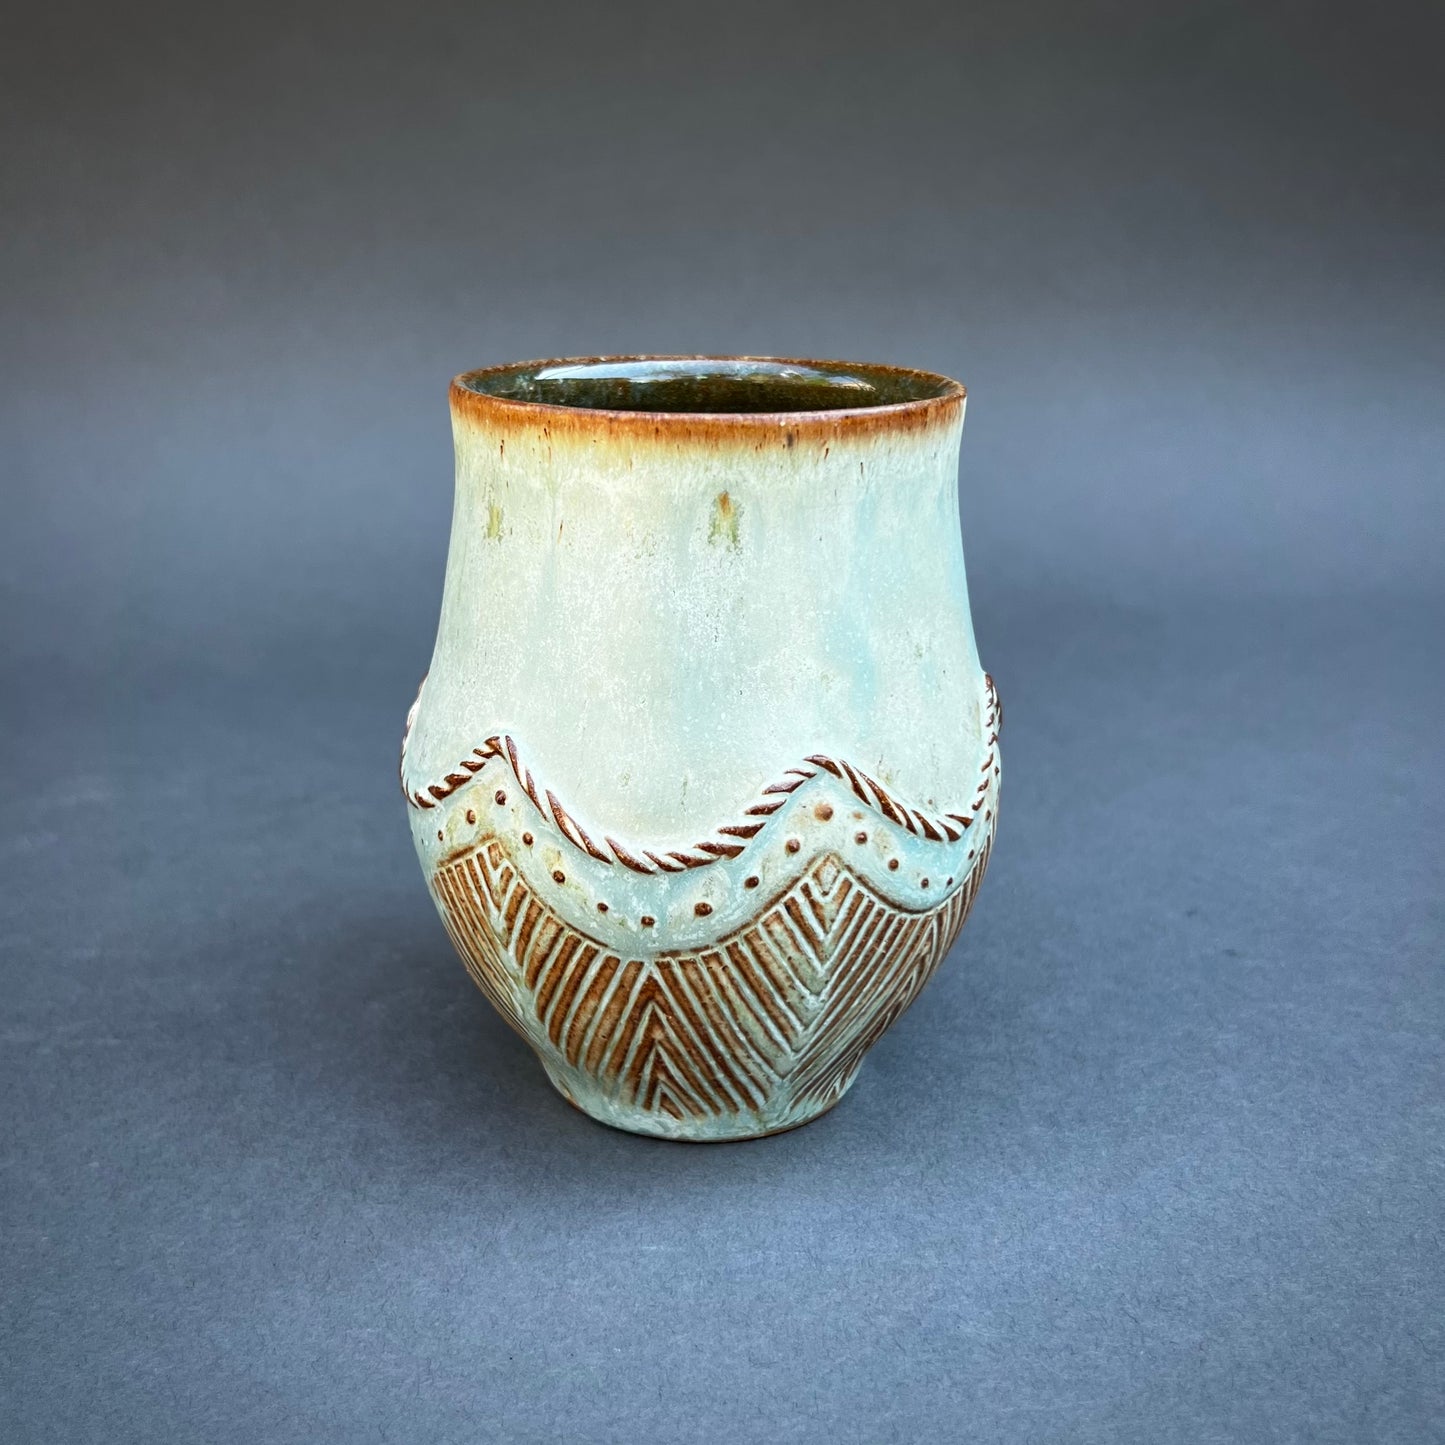 Copper Coil Decorated Mug